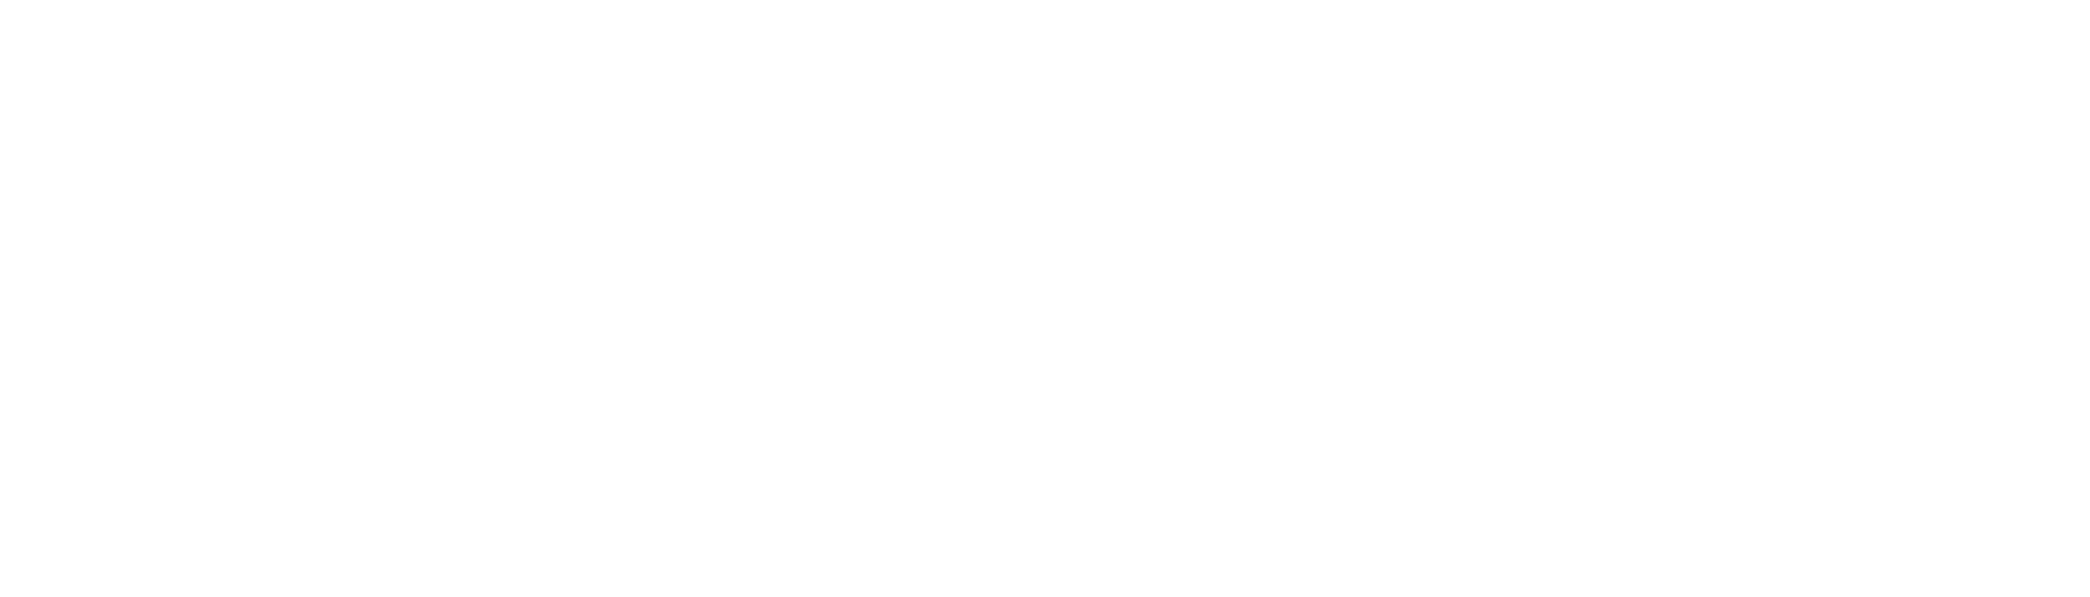 669-6698656_nasdaq-logo